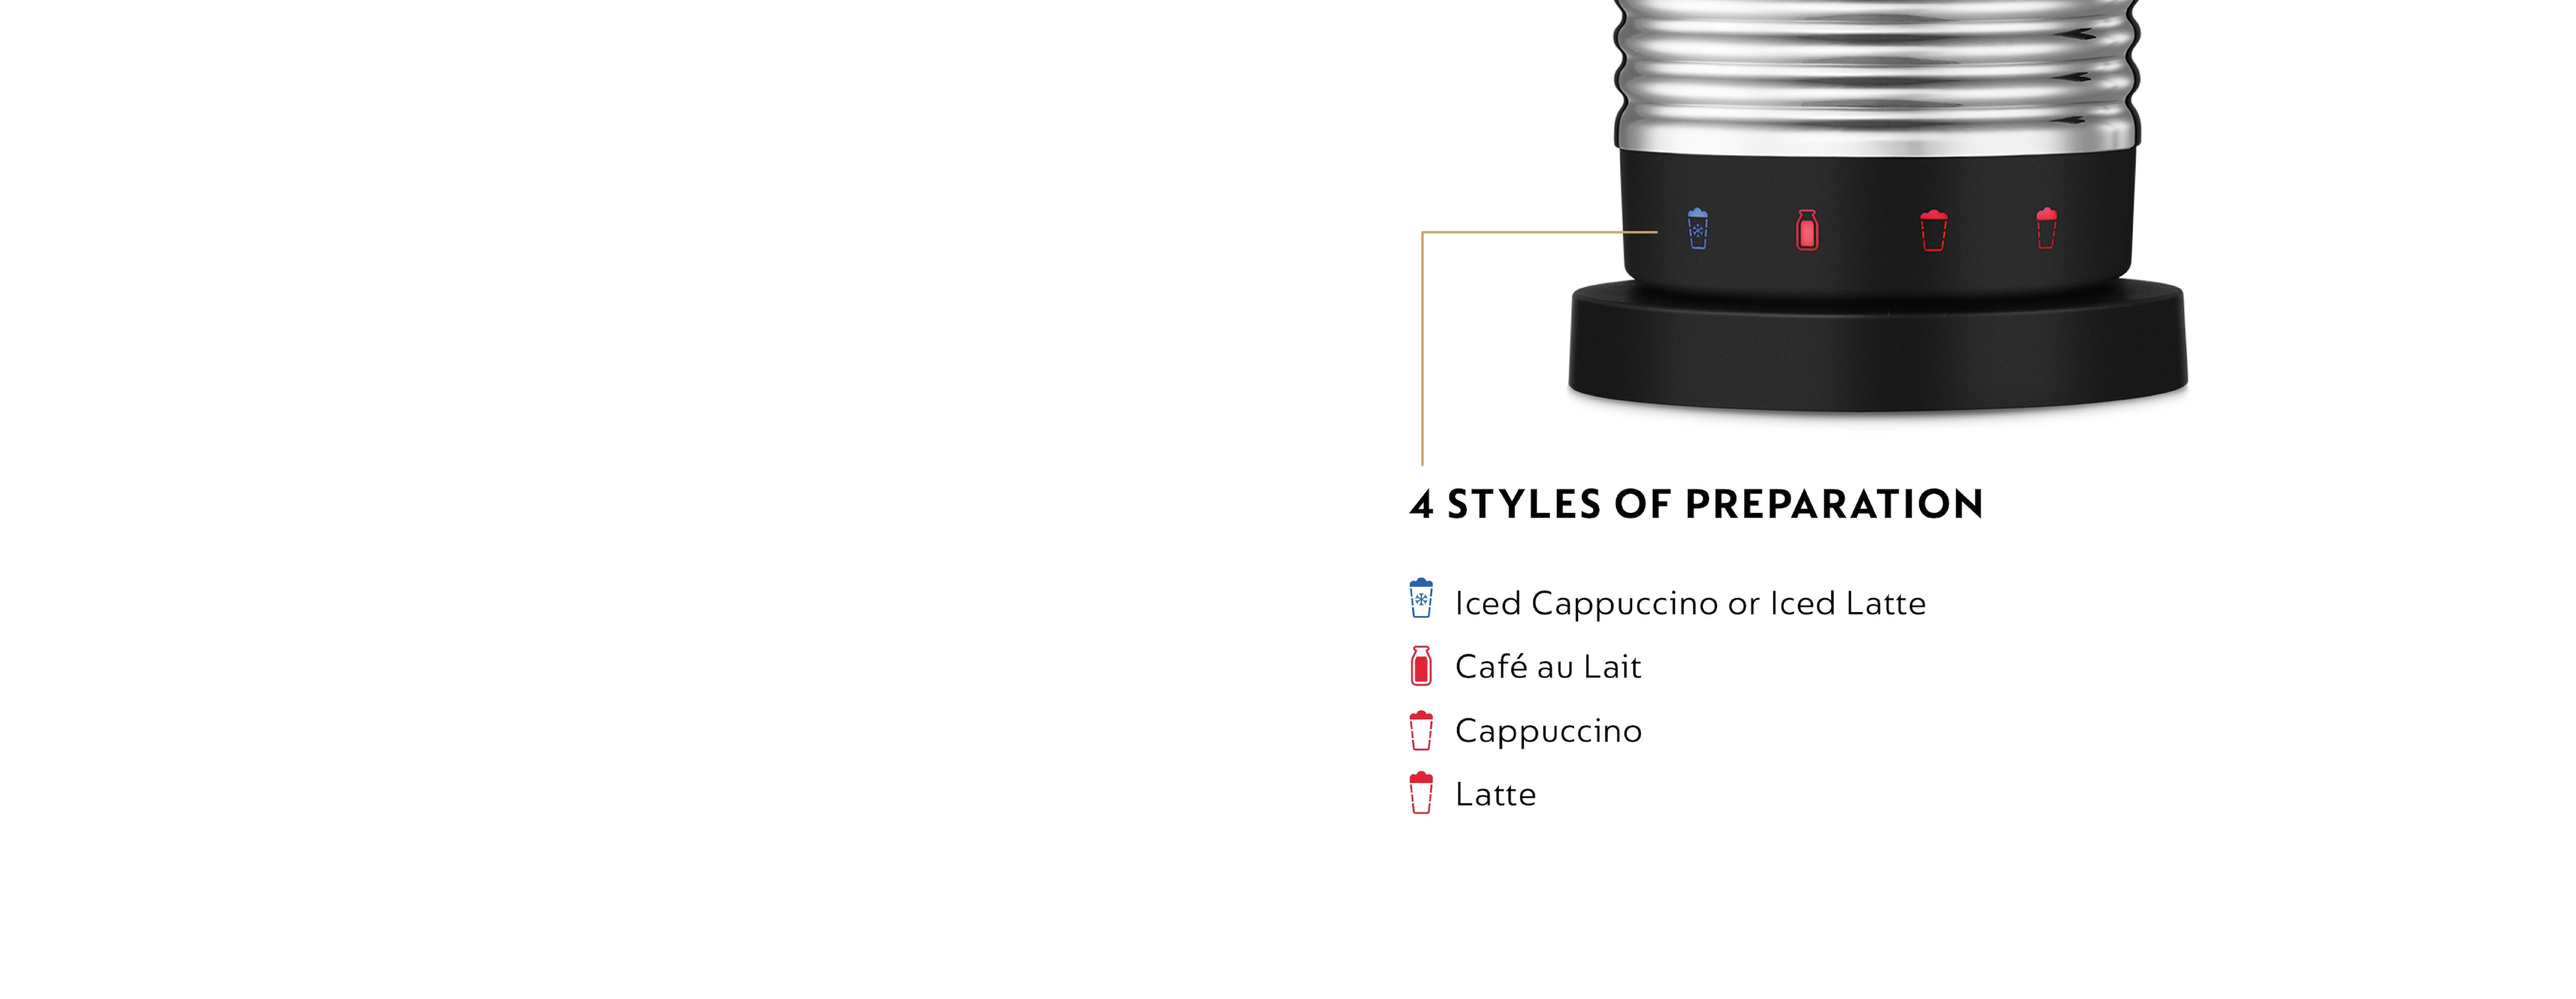 Nespresso Aeroccino 4 - Milk Frother ,Silver